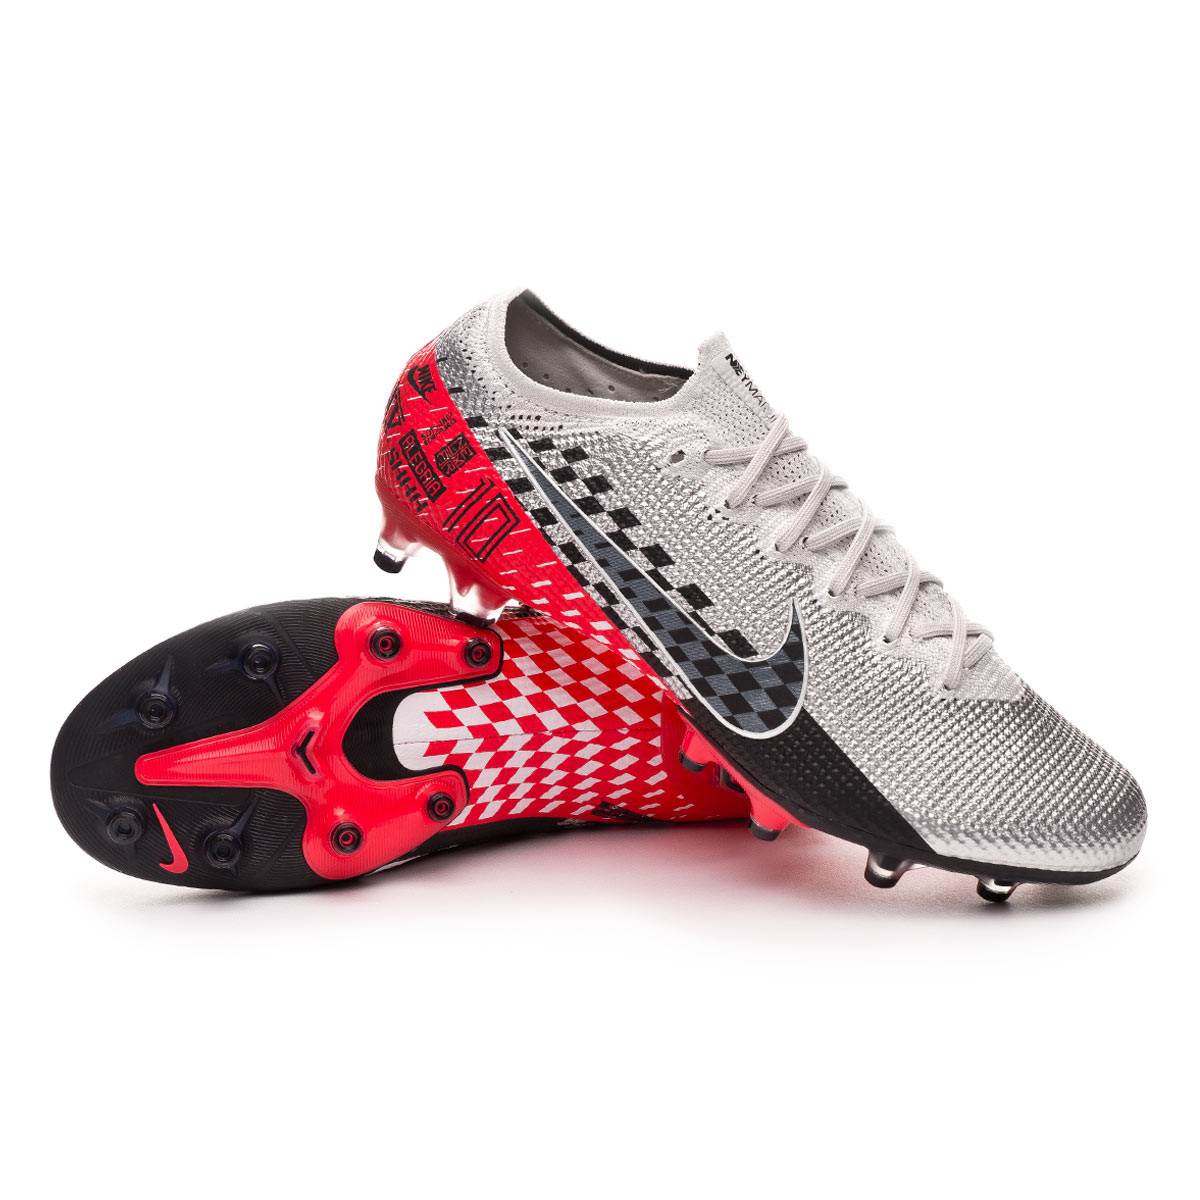 Football Boots Nike Mercurial Vapor XIII Elite AG-Pro Neymar Jr  Chrome-Black-Red orbit-Platinum tint - Football store Fútbol Emotion